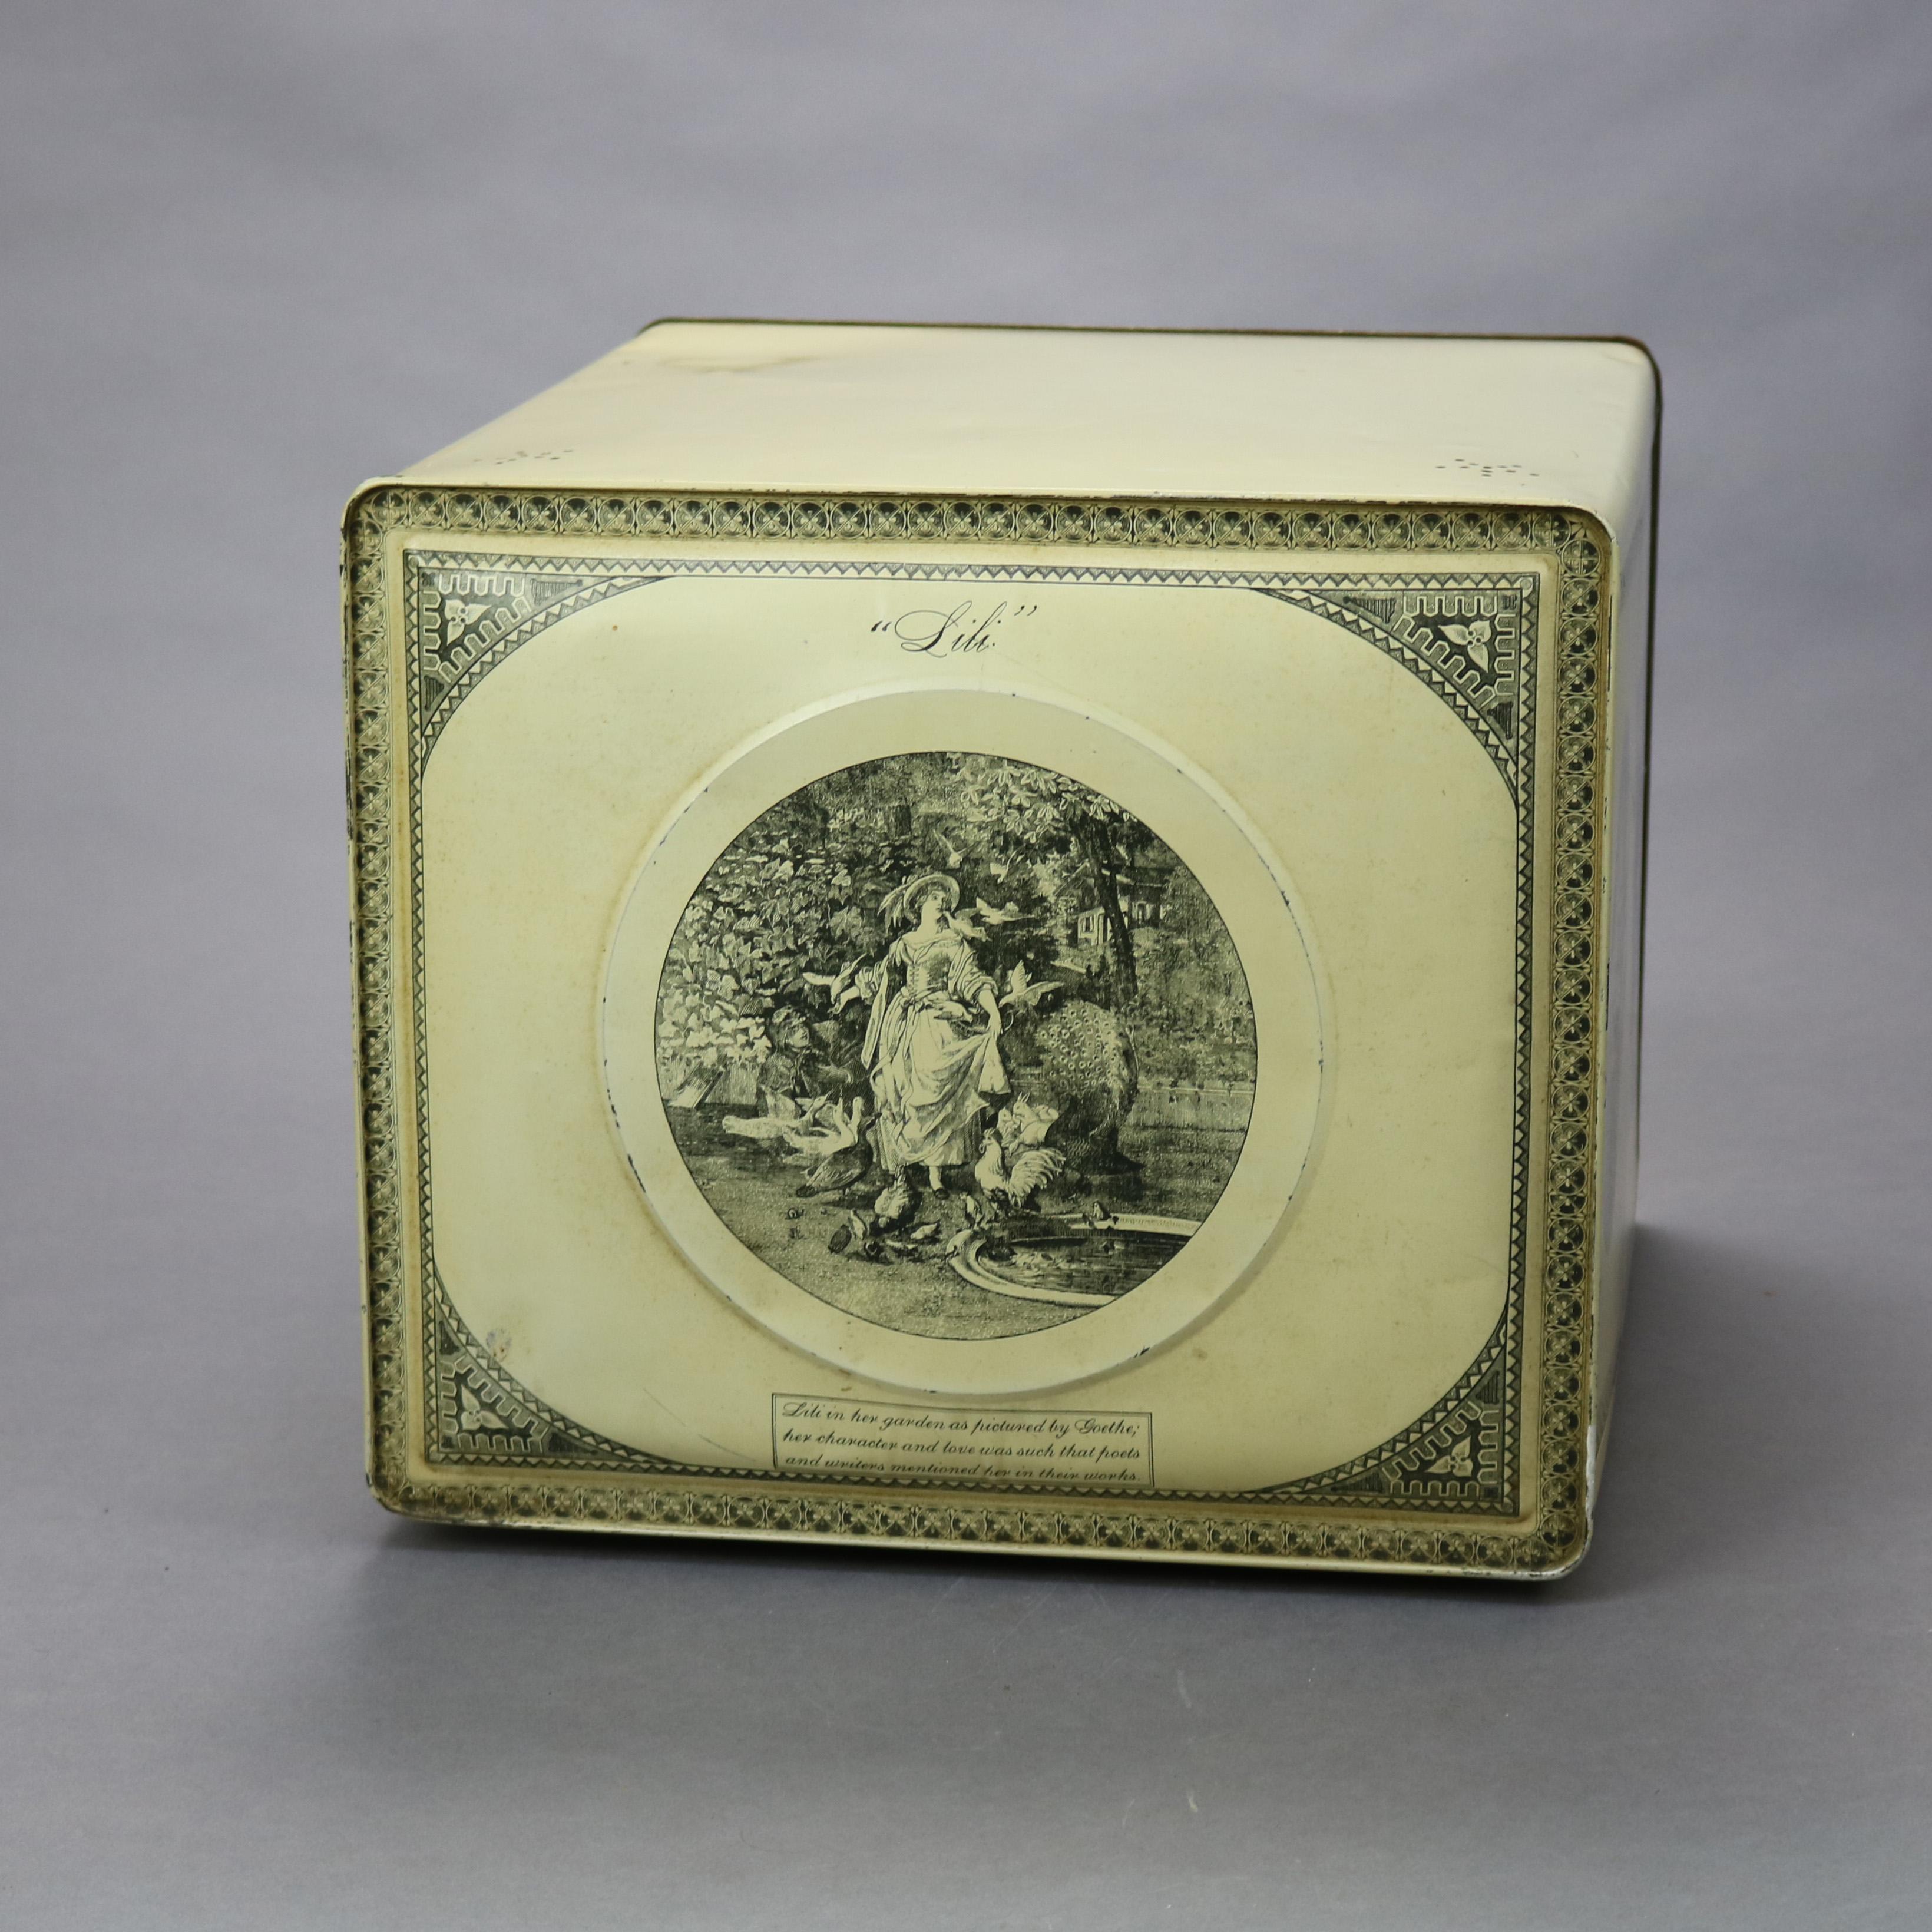 20th Century Early Antique Schepps Advertising Tin Cake Box with Genre Scenes, Circa 1910